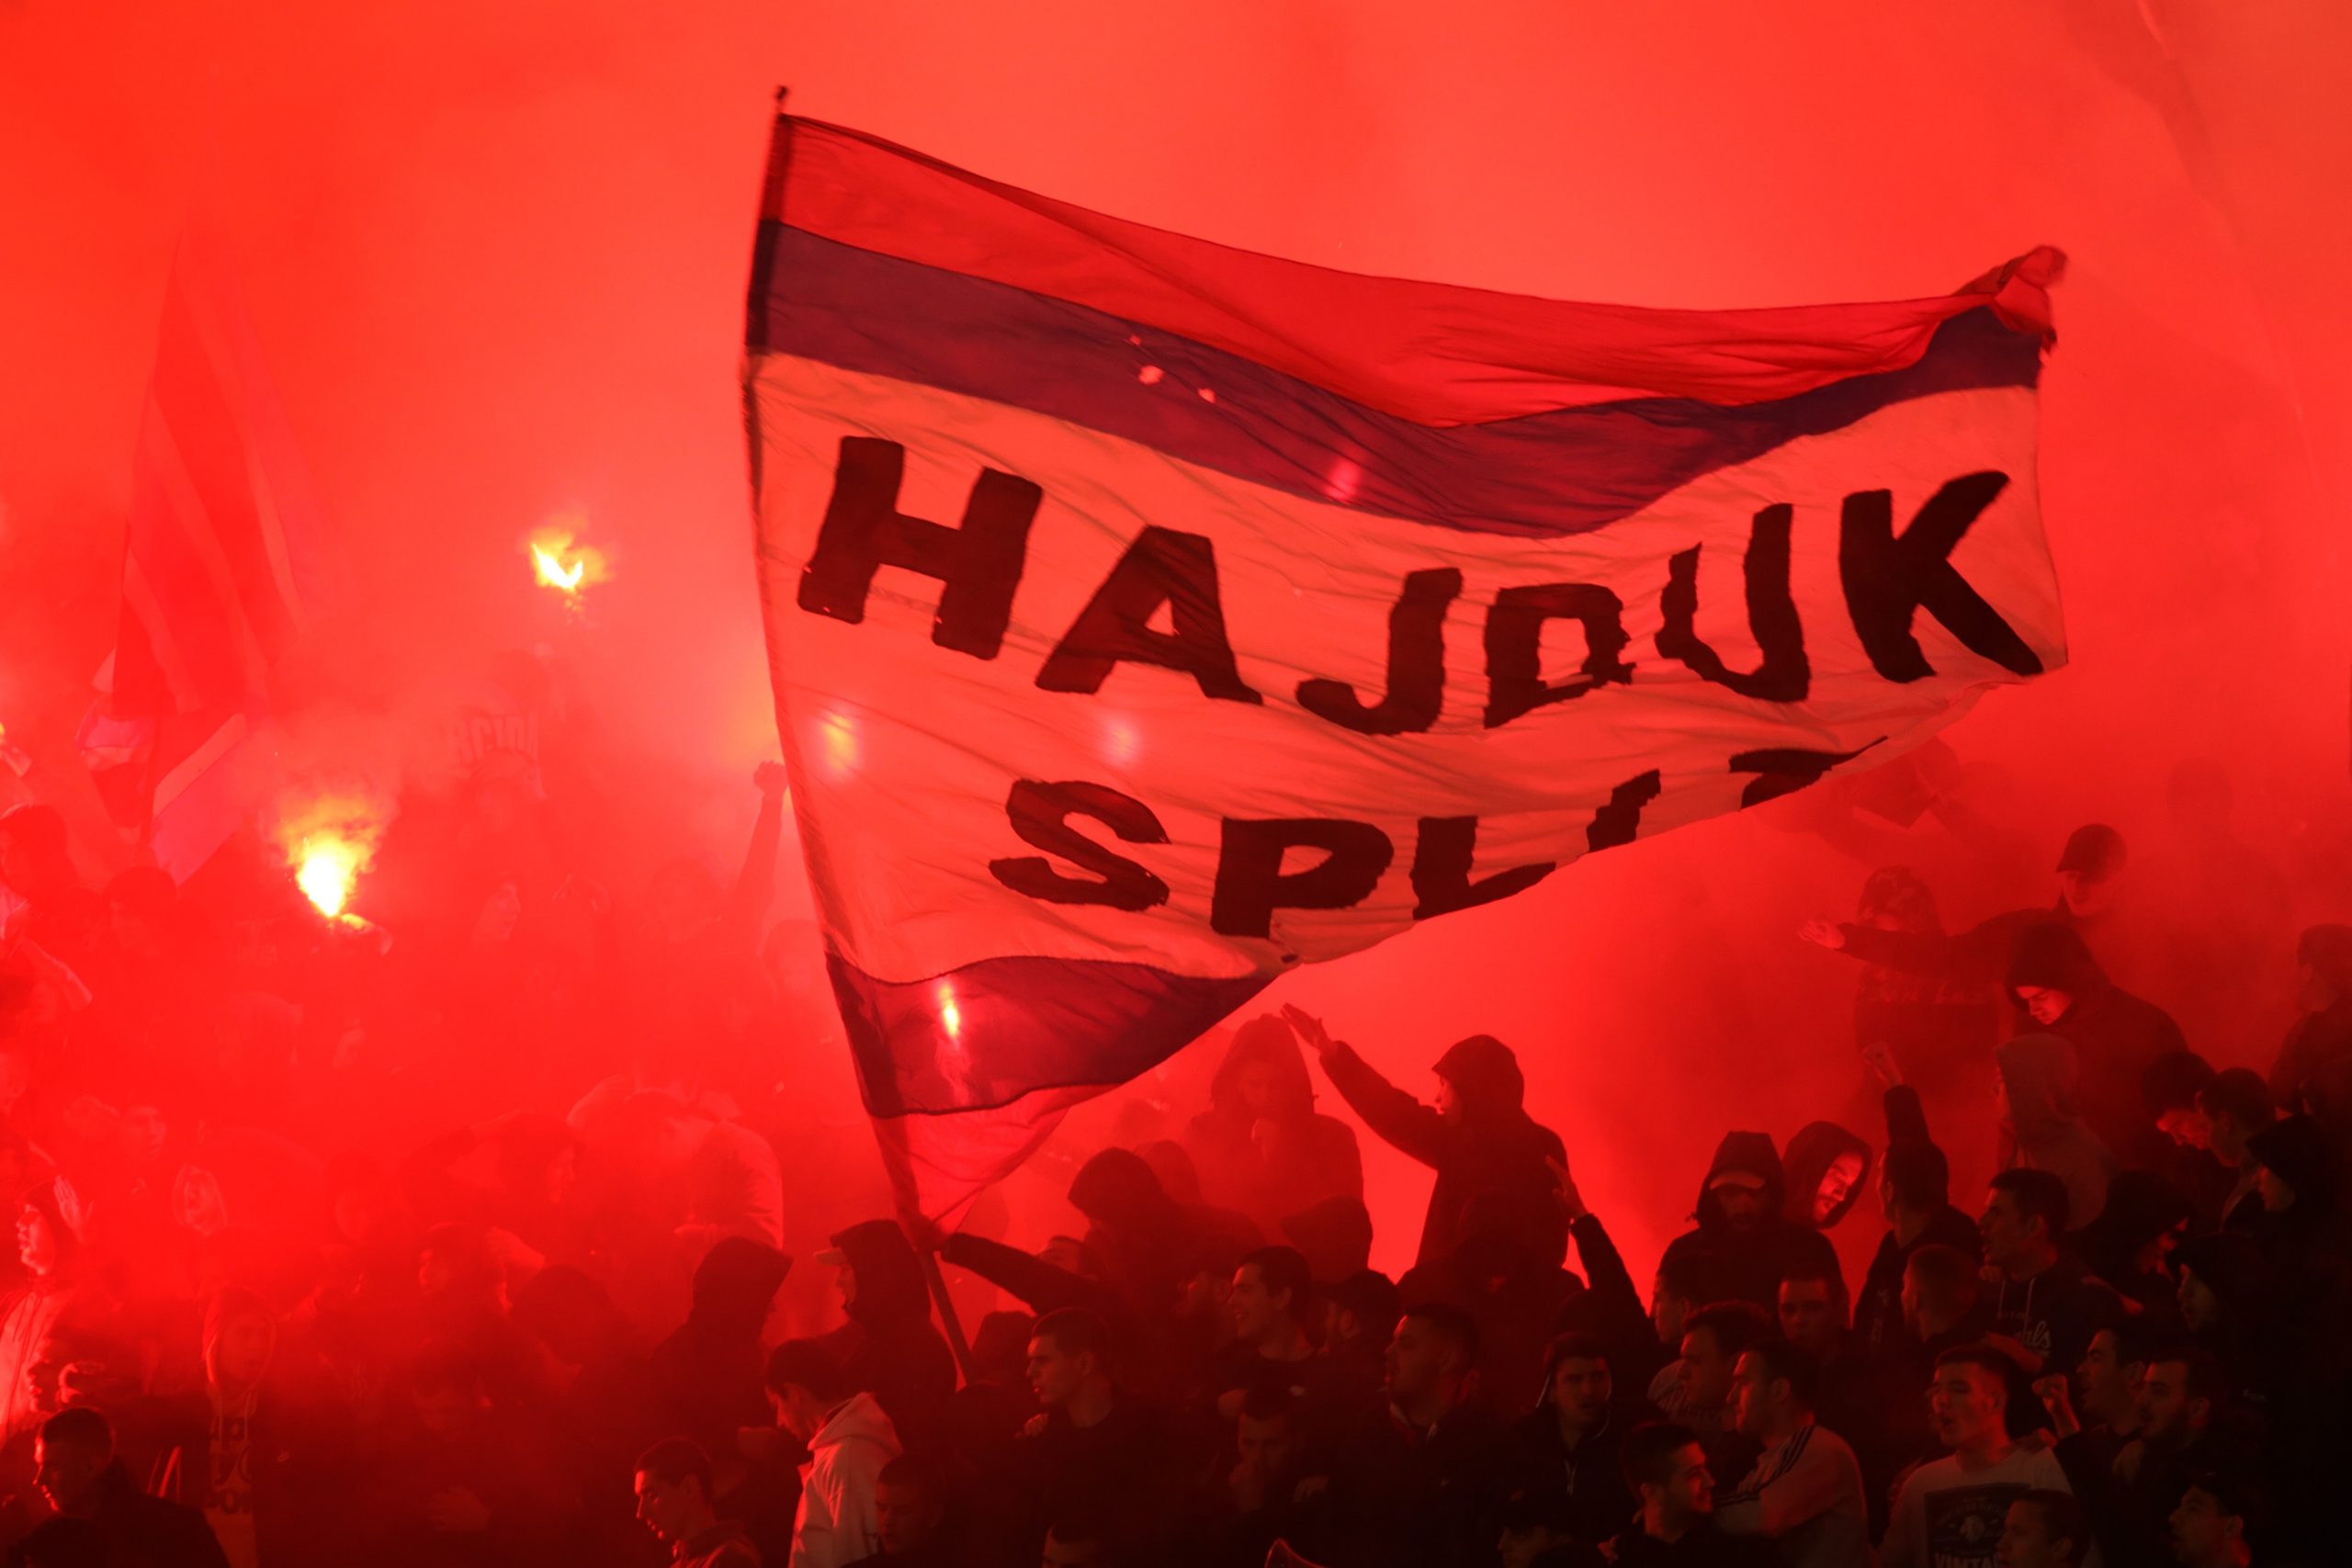 07.04.2019., stadion Poljud, Split - Hrvatski Telekom Prva liga, 28. kolo, HNK Hajduk - NK Osijek. Torcida. 
Photo: Miranda Cikotic/PIXSELL